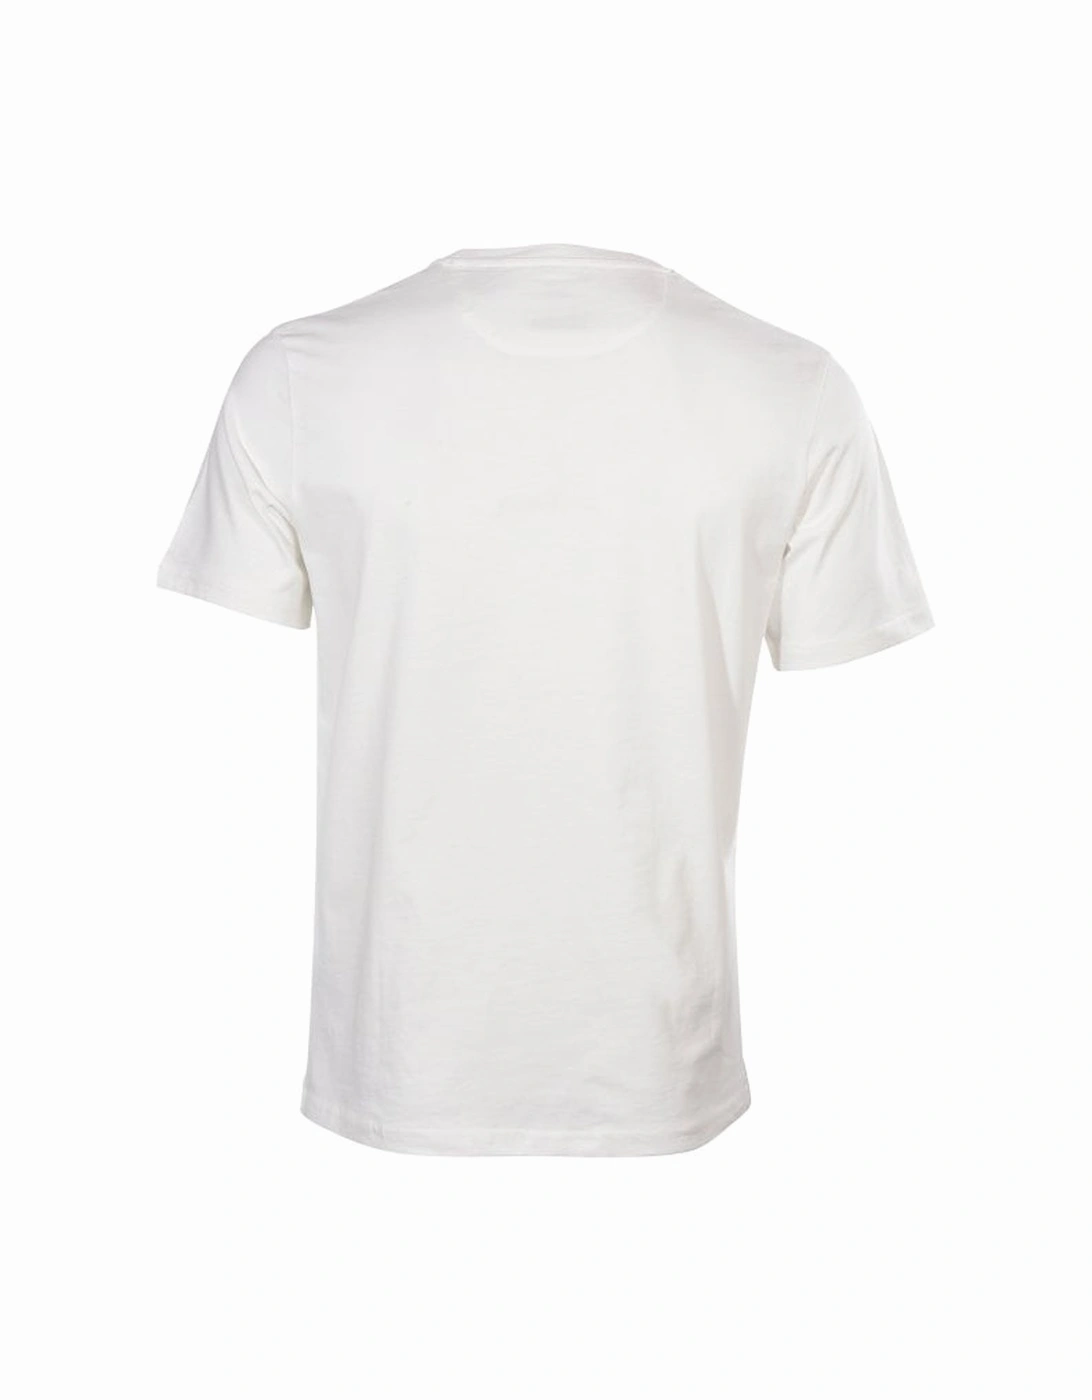 Arrowhead T-Shirt, Powder White